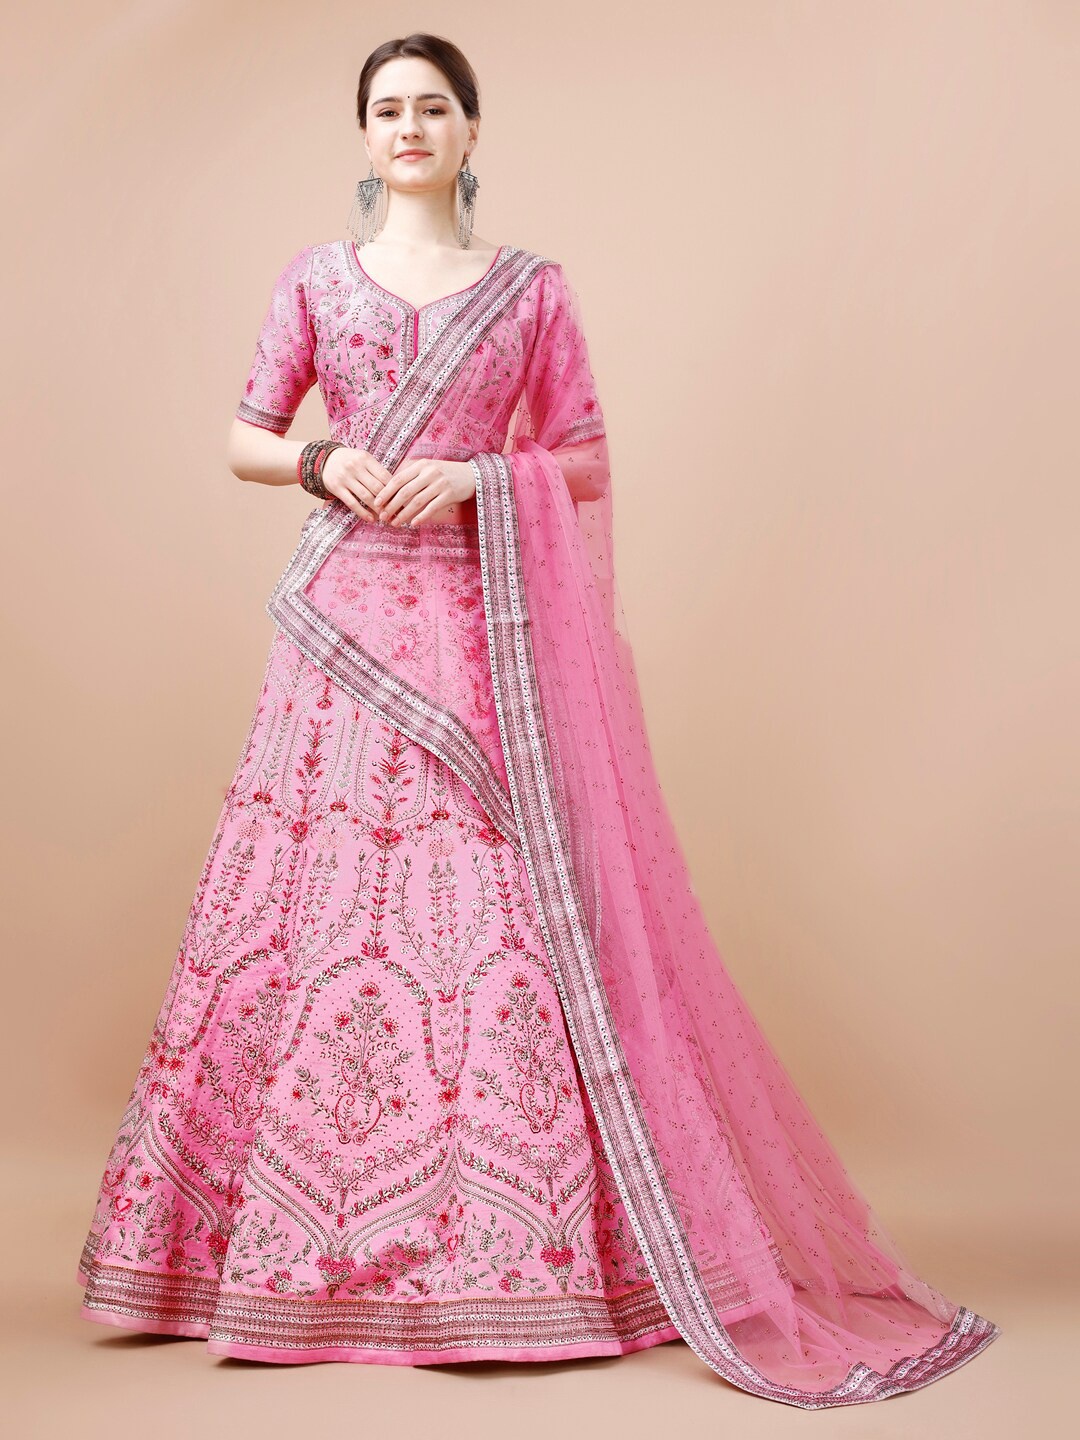 

SAPTRANGI Floral Embroidered Ready To Wear Lehenga & Blouse With Dupatta, Pink